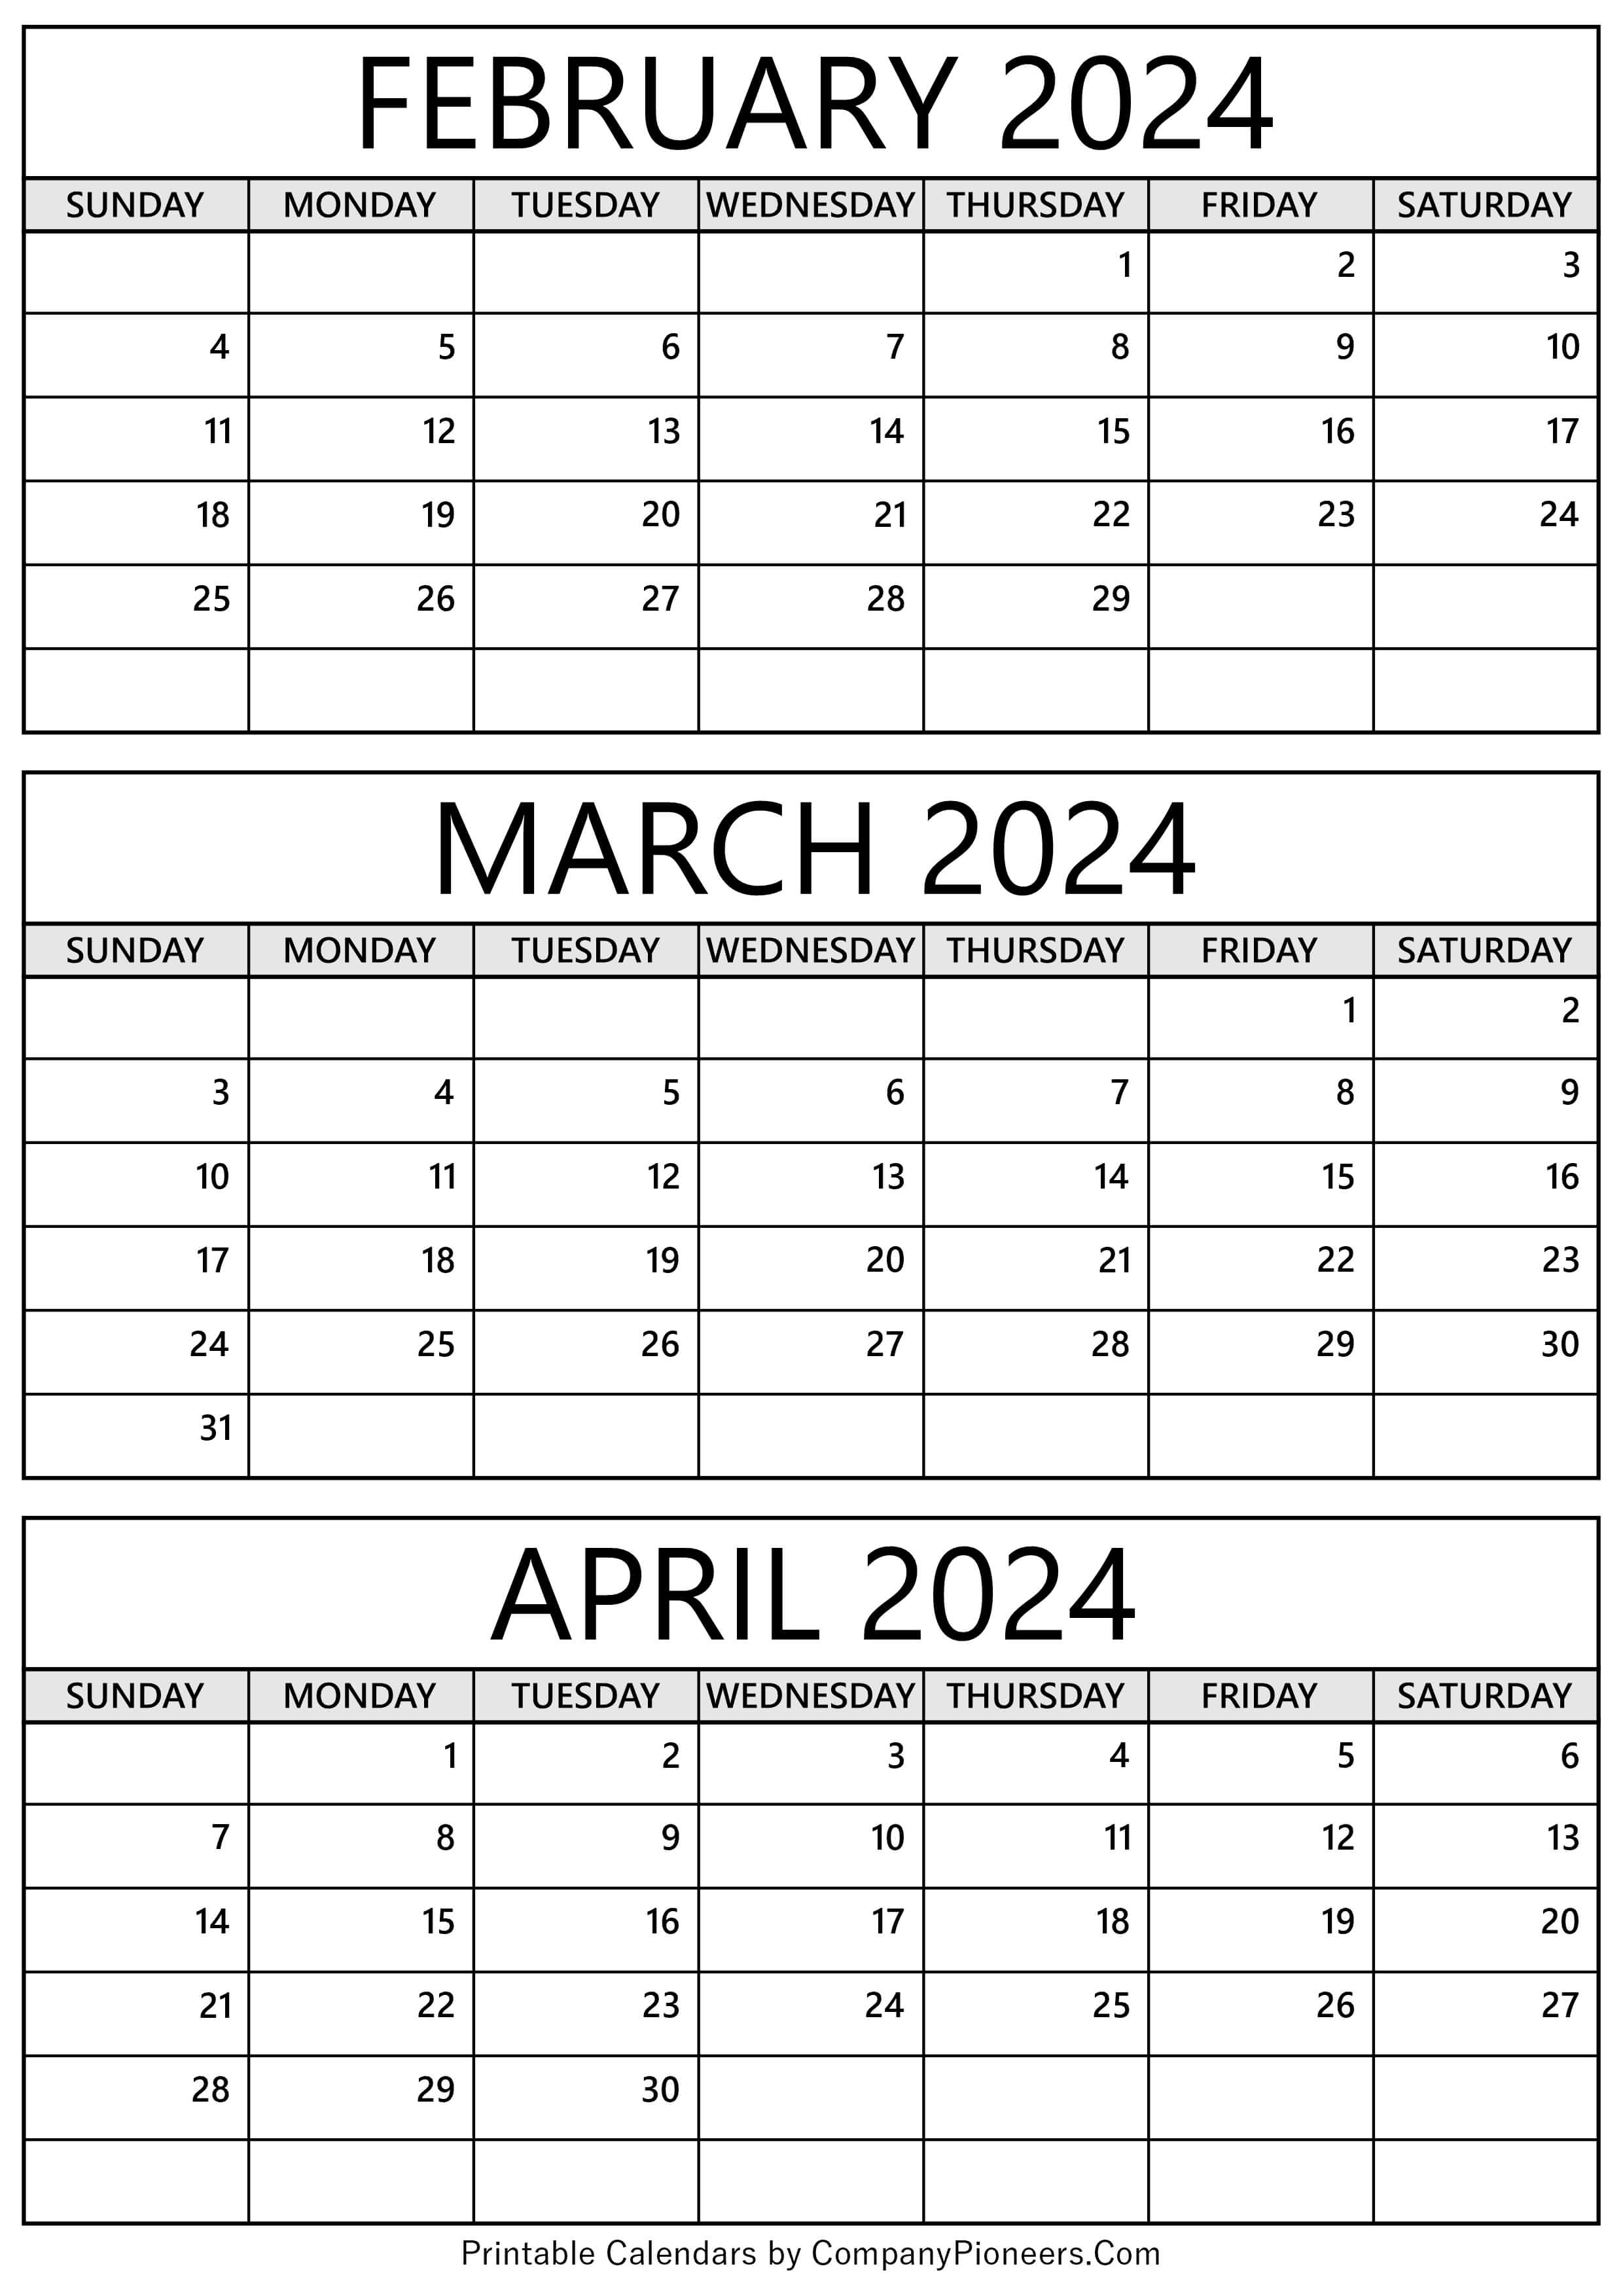 Calendar February March April 2024